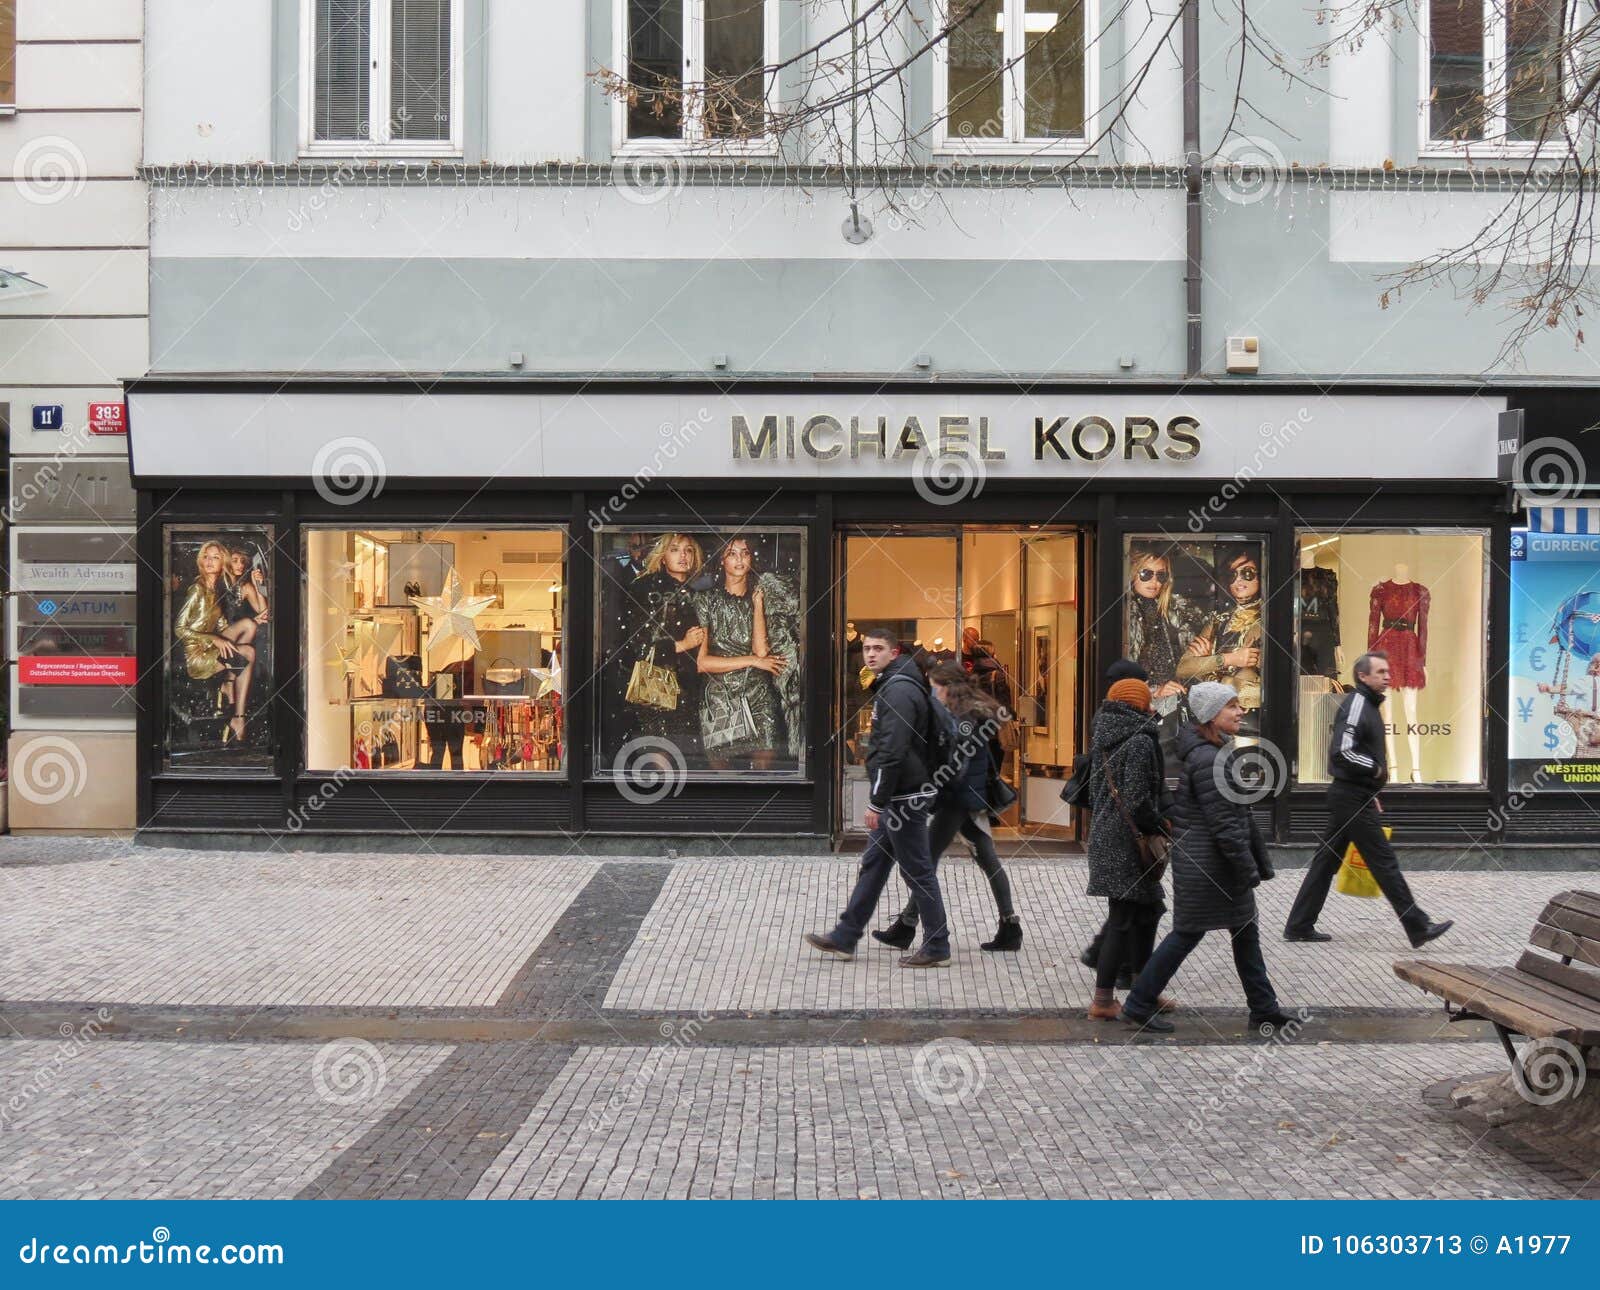 Michael Kors Store in Prague Editorial Stock Photo - Image shop, michael: 106303713